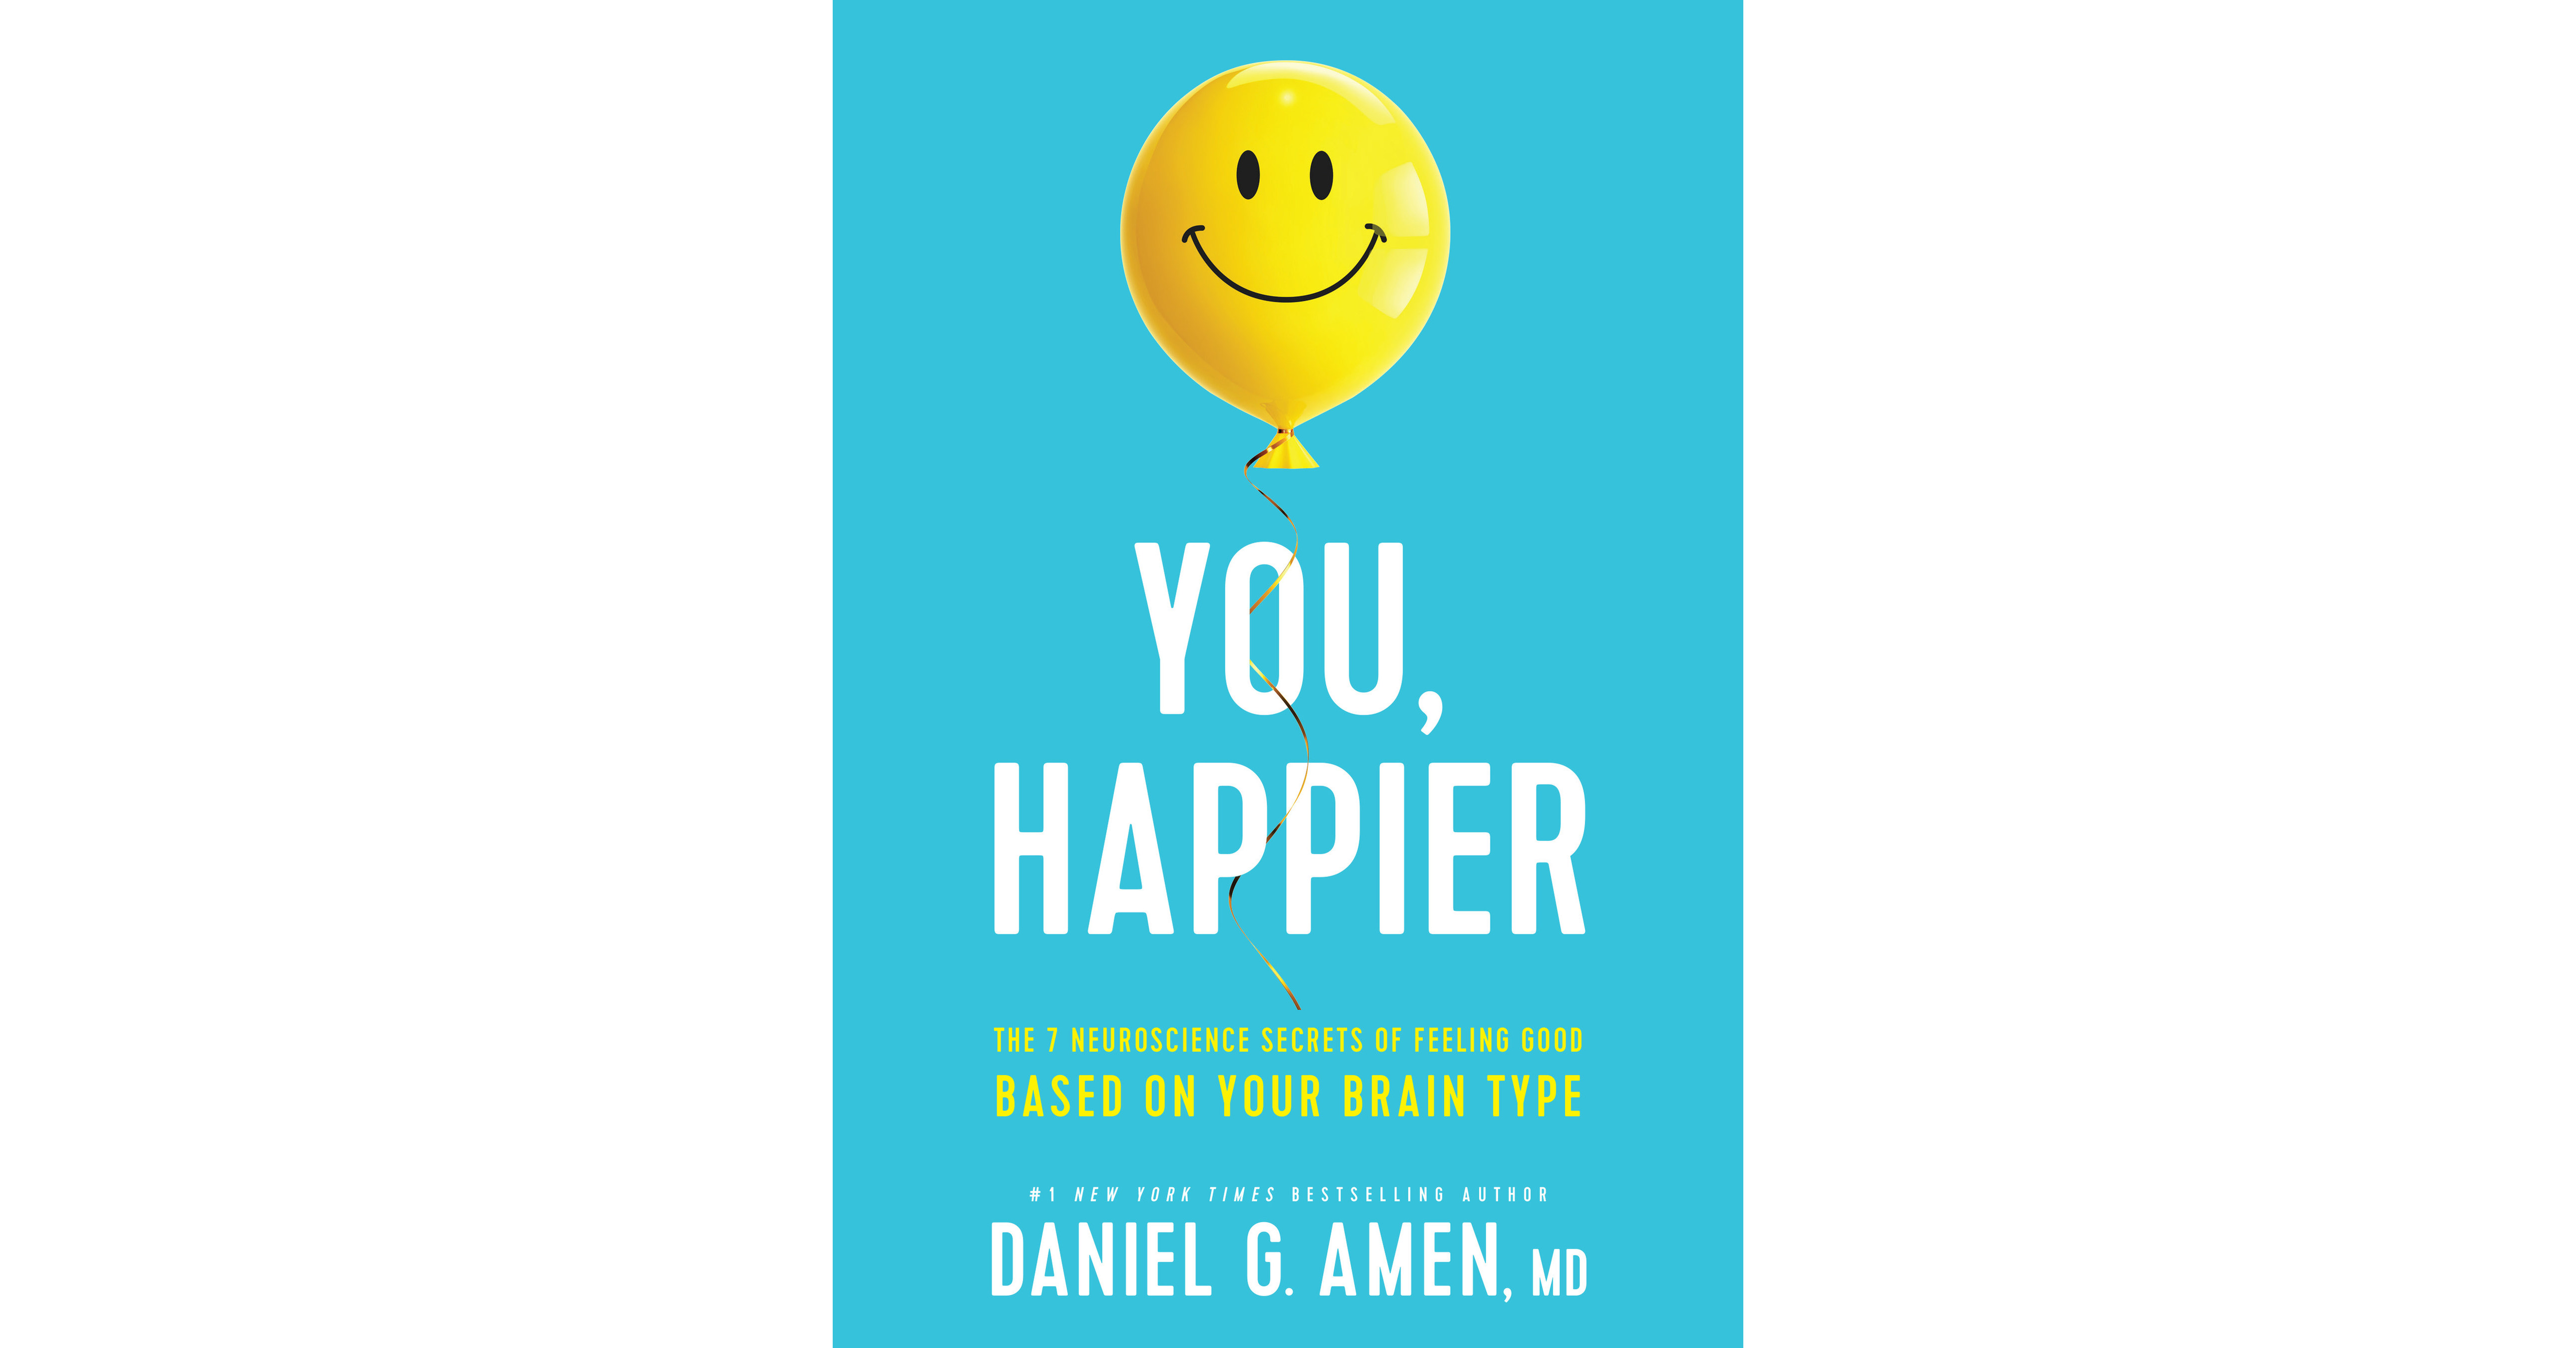 Daniel G. Amen, MD releases new book You, Happier: The 7